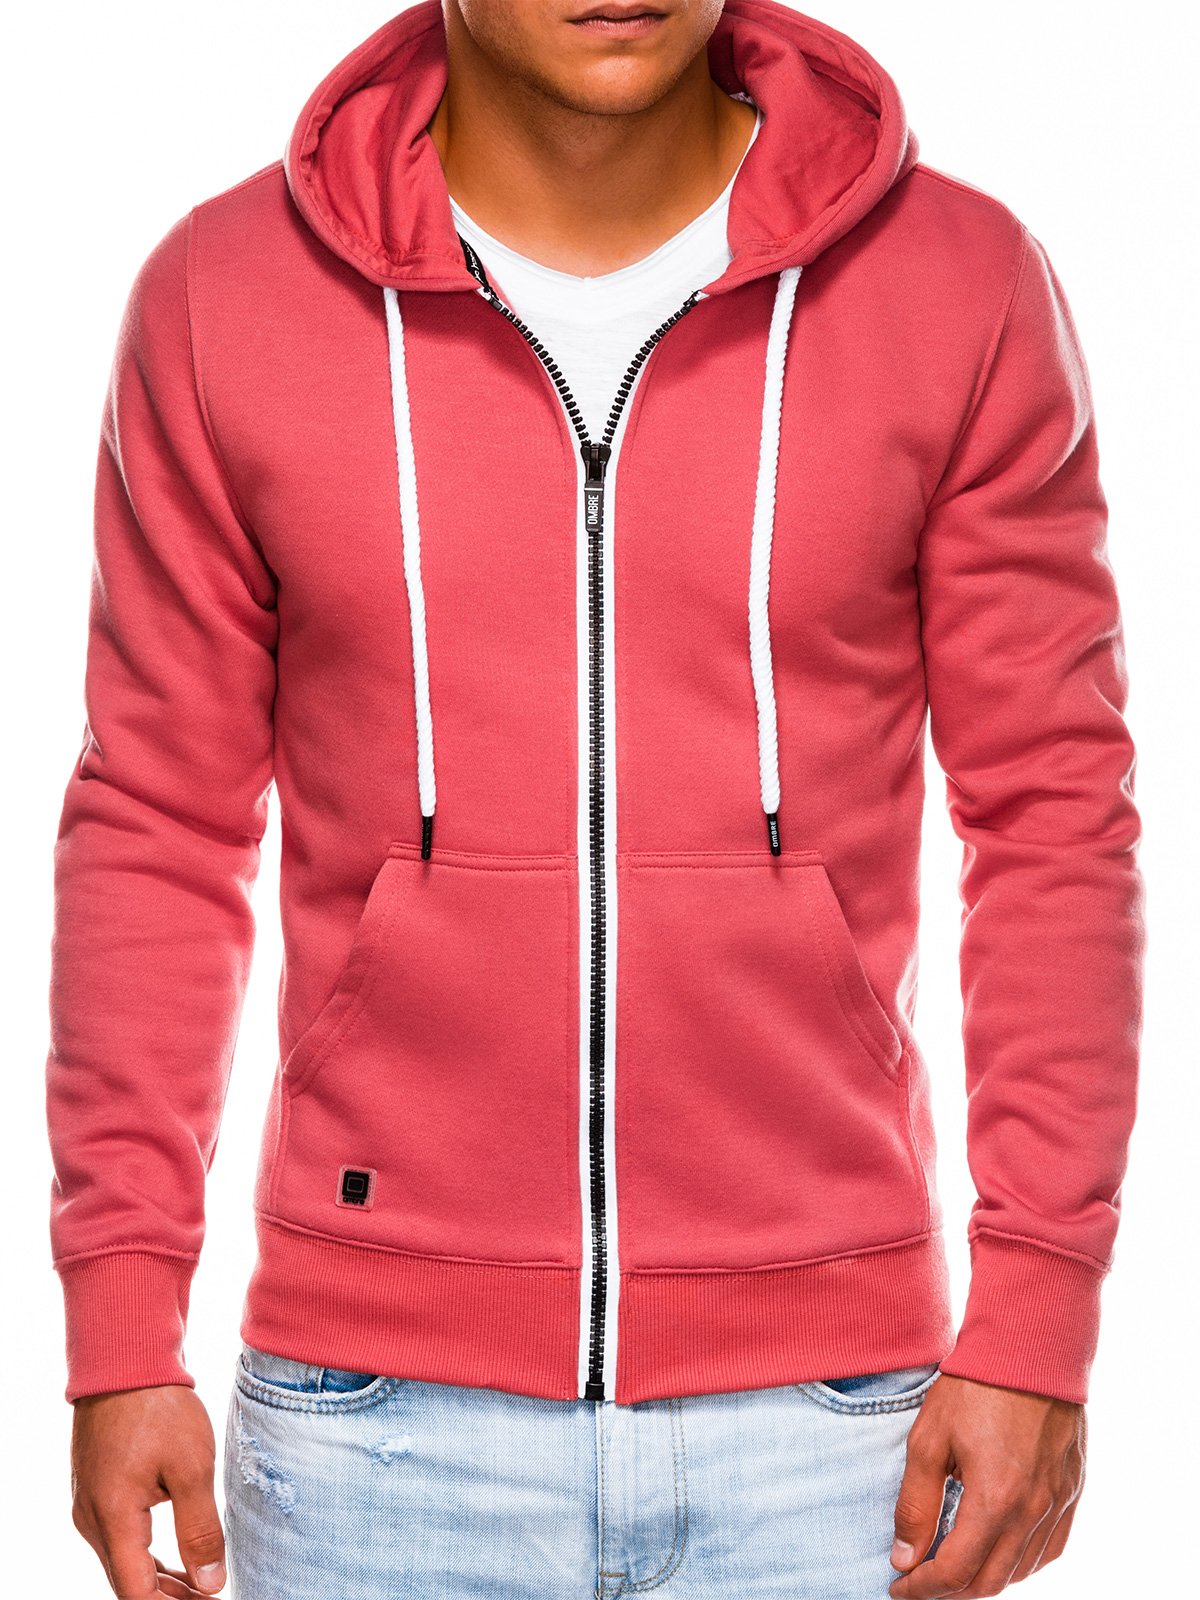 Men's zip-up sweatshirt B977 - coral | MODONE wholesale - Clothing For Men